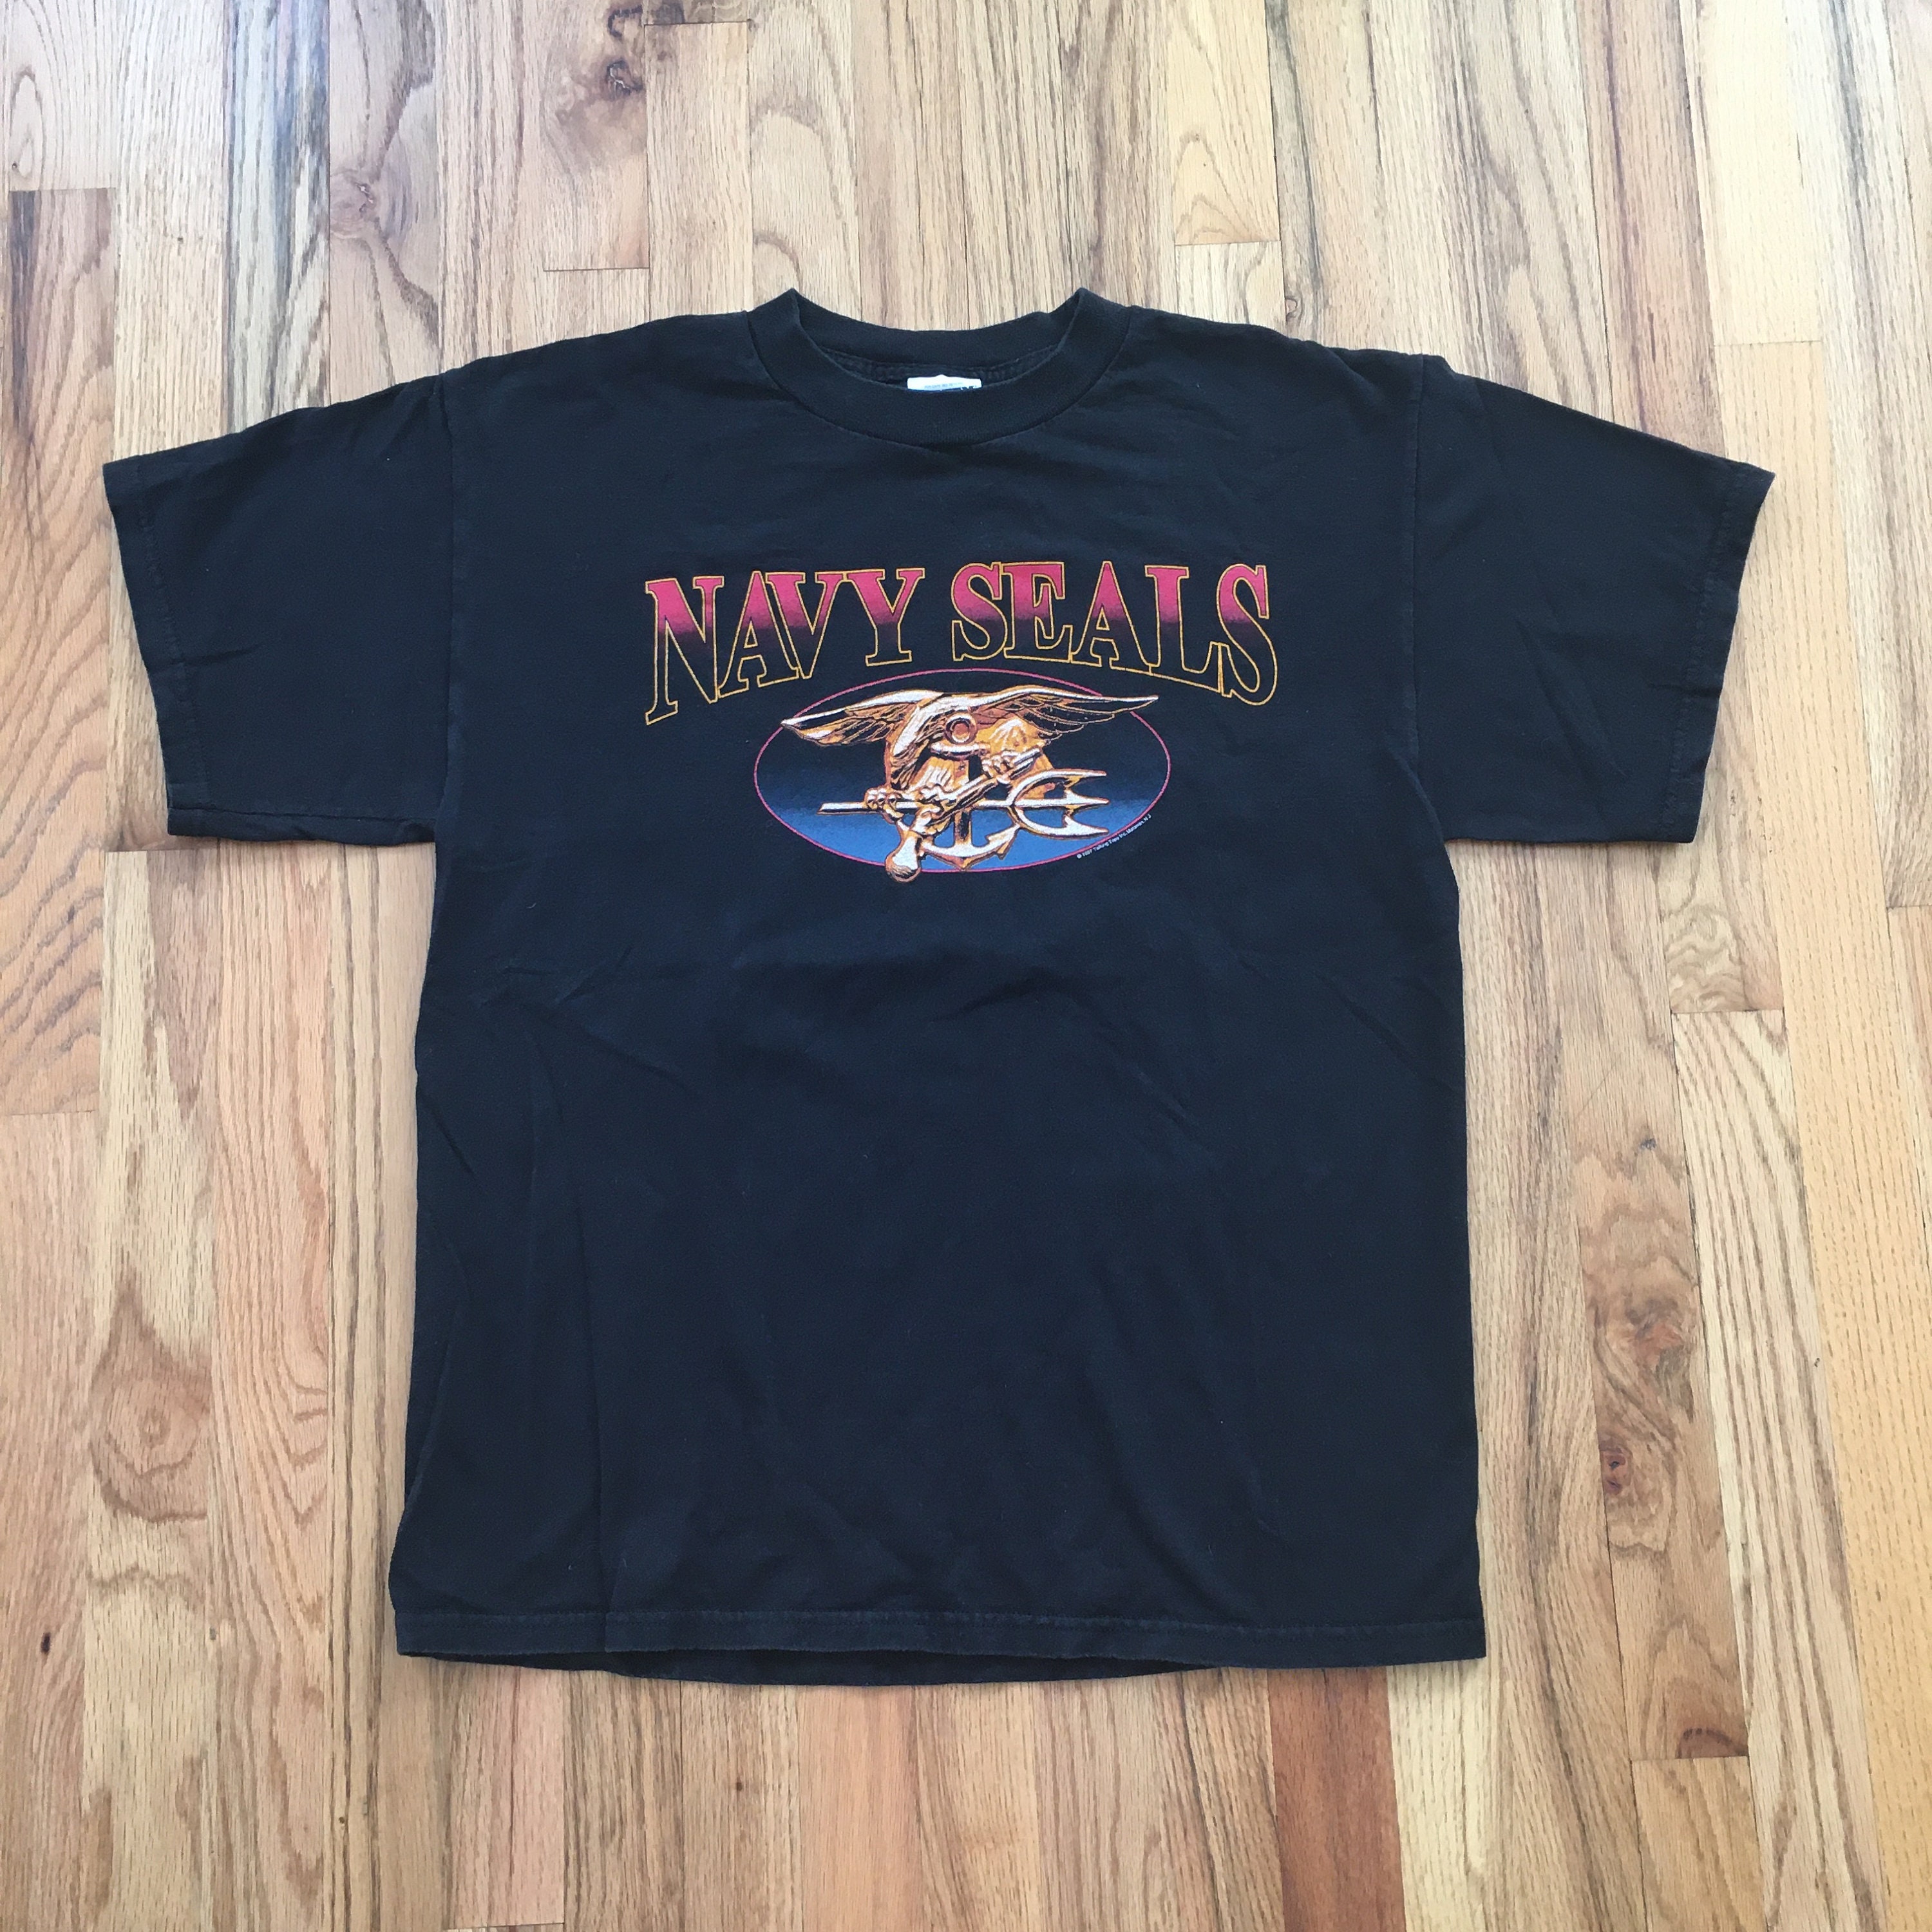 Vintage 1997 Navy Seals Shirt